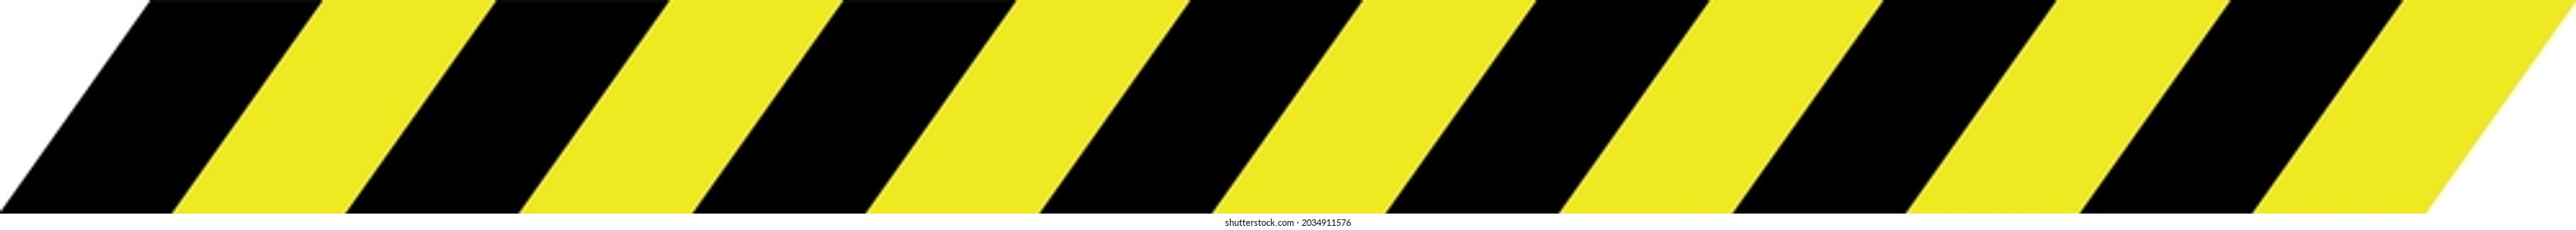 картинку полоски черно желтый